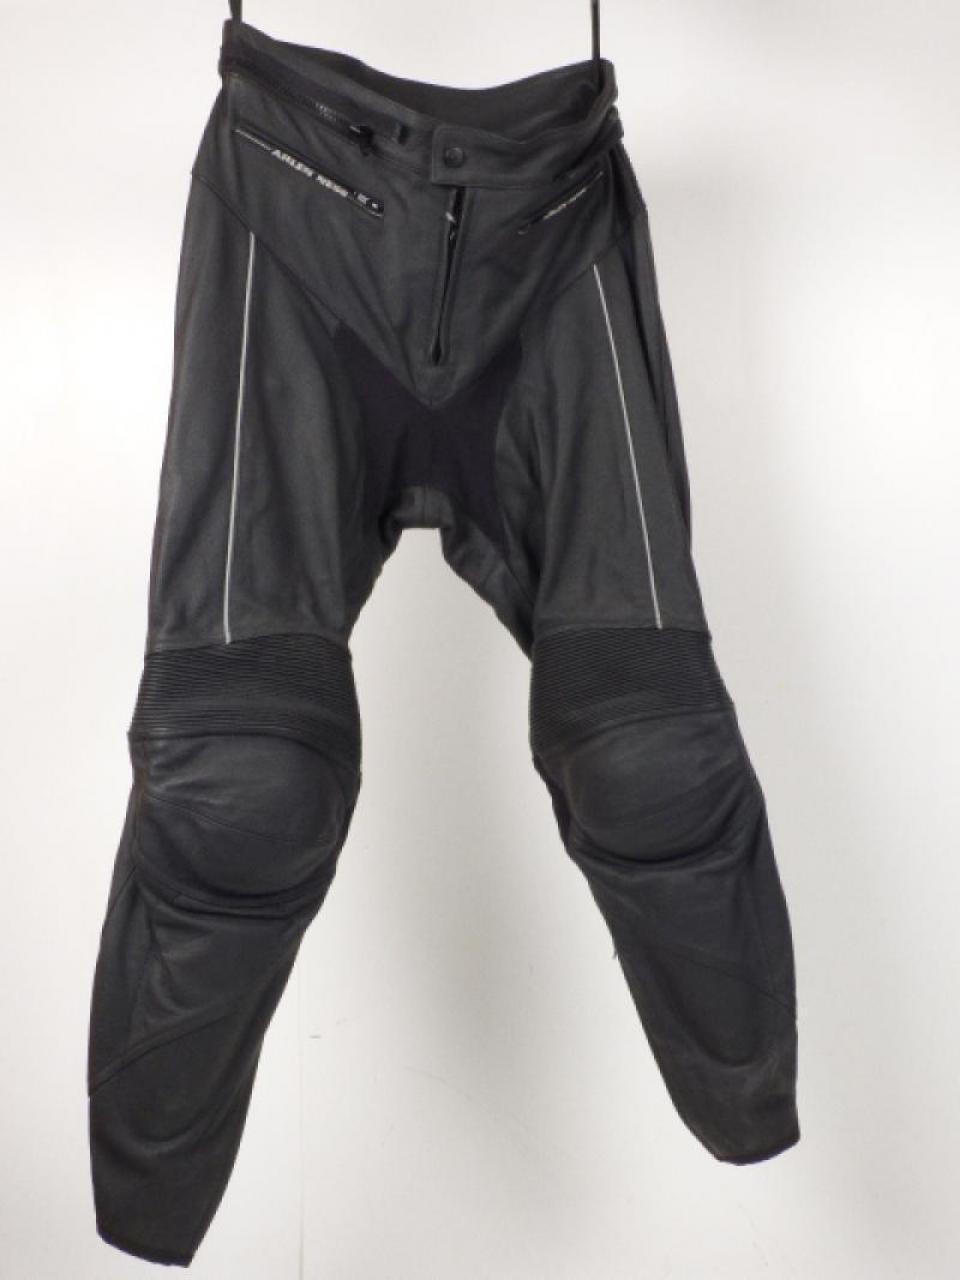 Pantalon pour moto route Arlen Ness Homme / Femme Arlen Ness Taille 54 LP-1275-AN Neuf